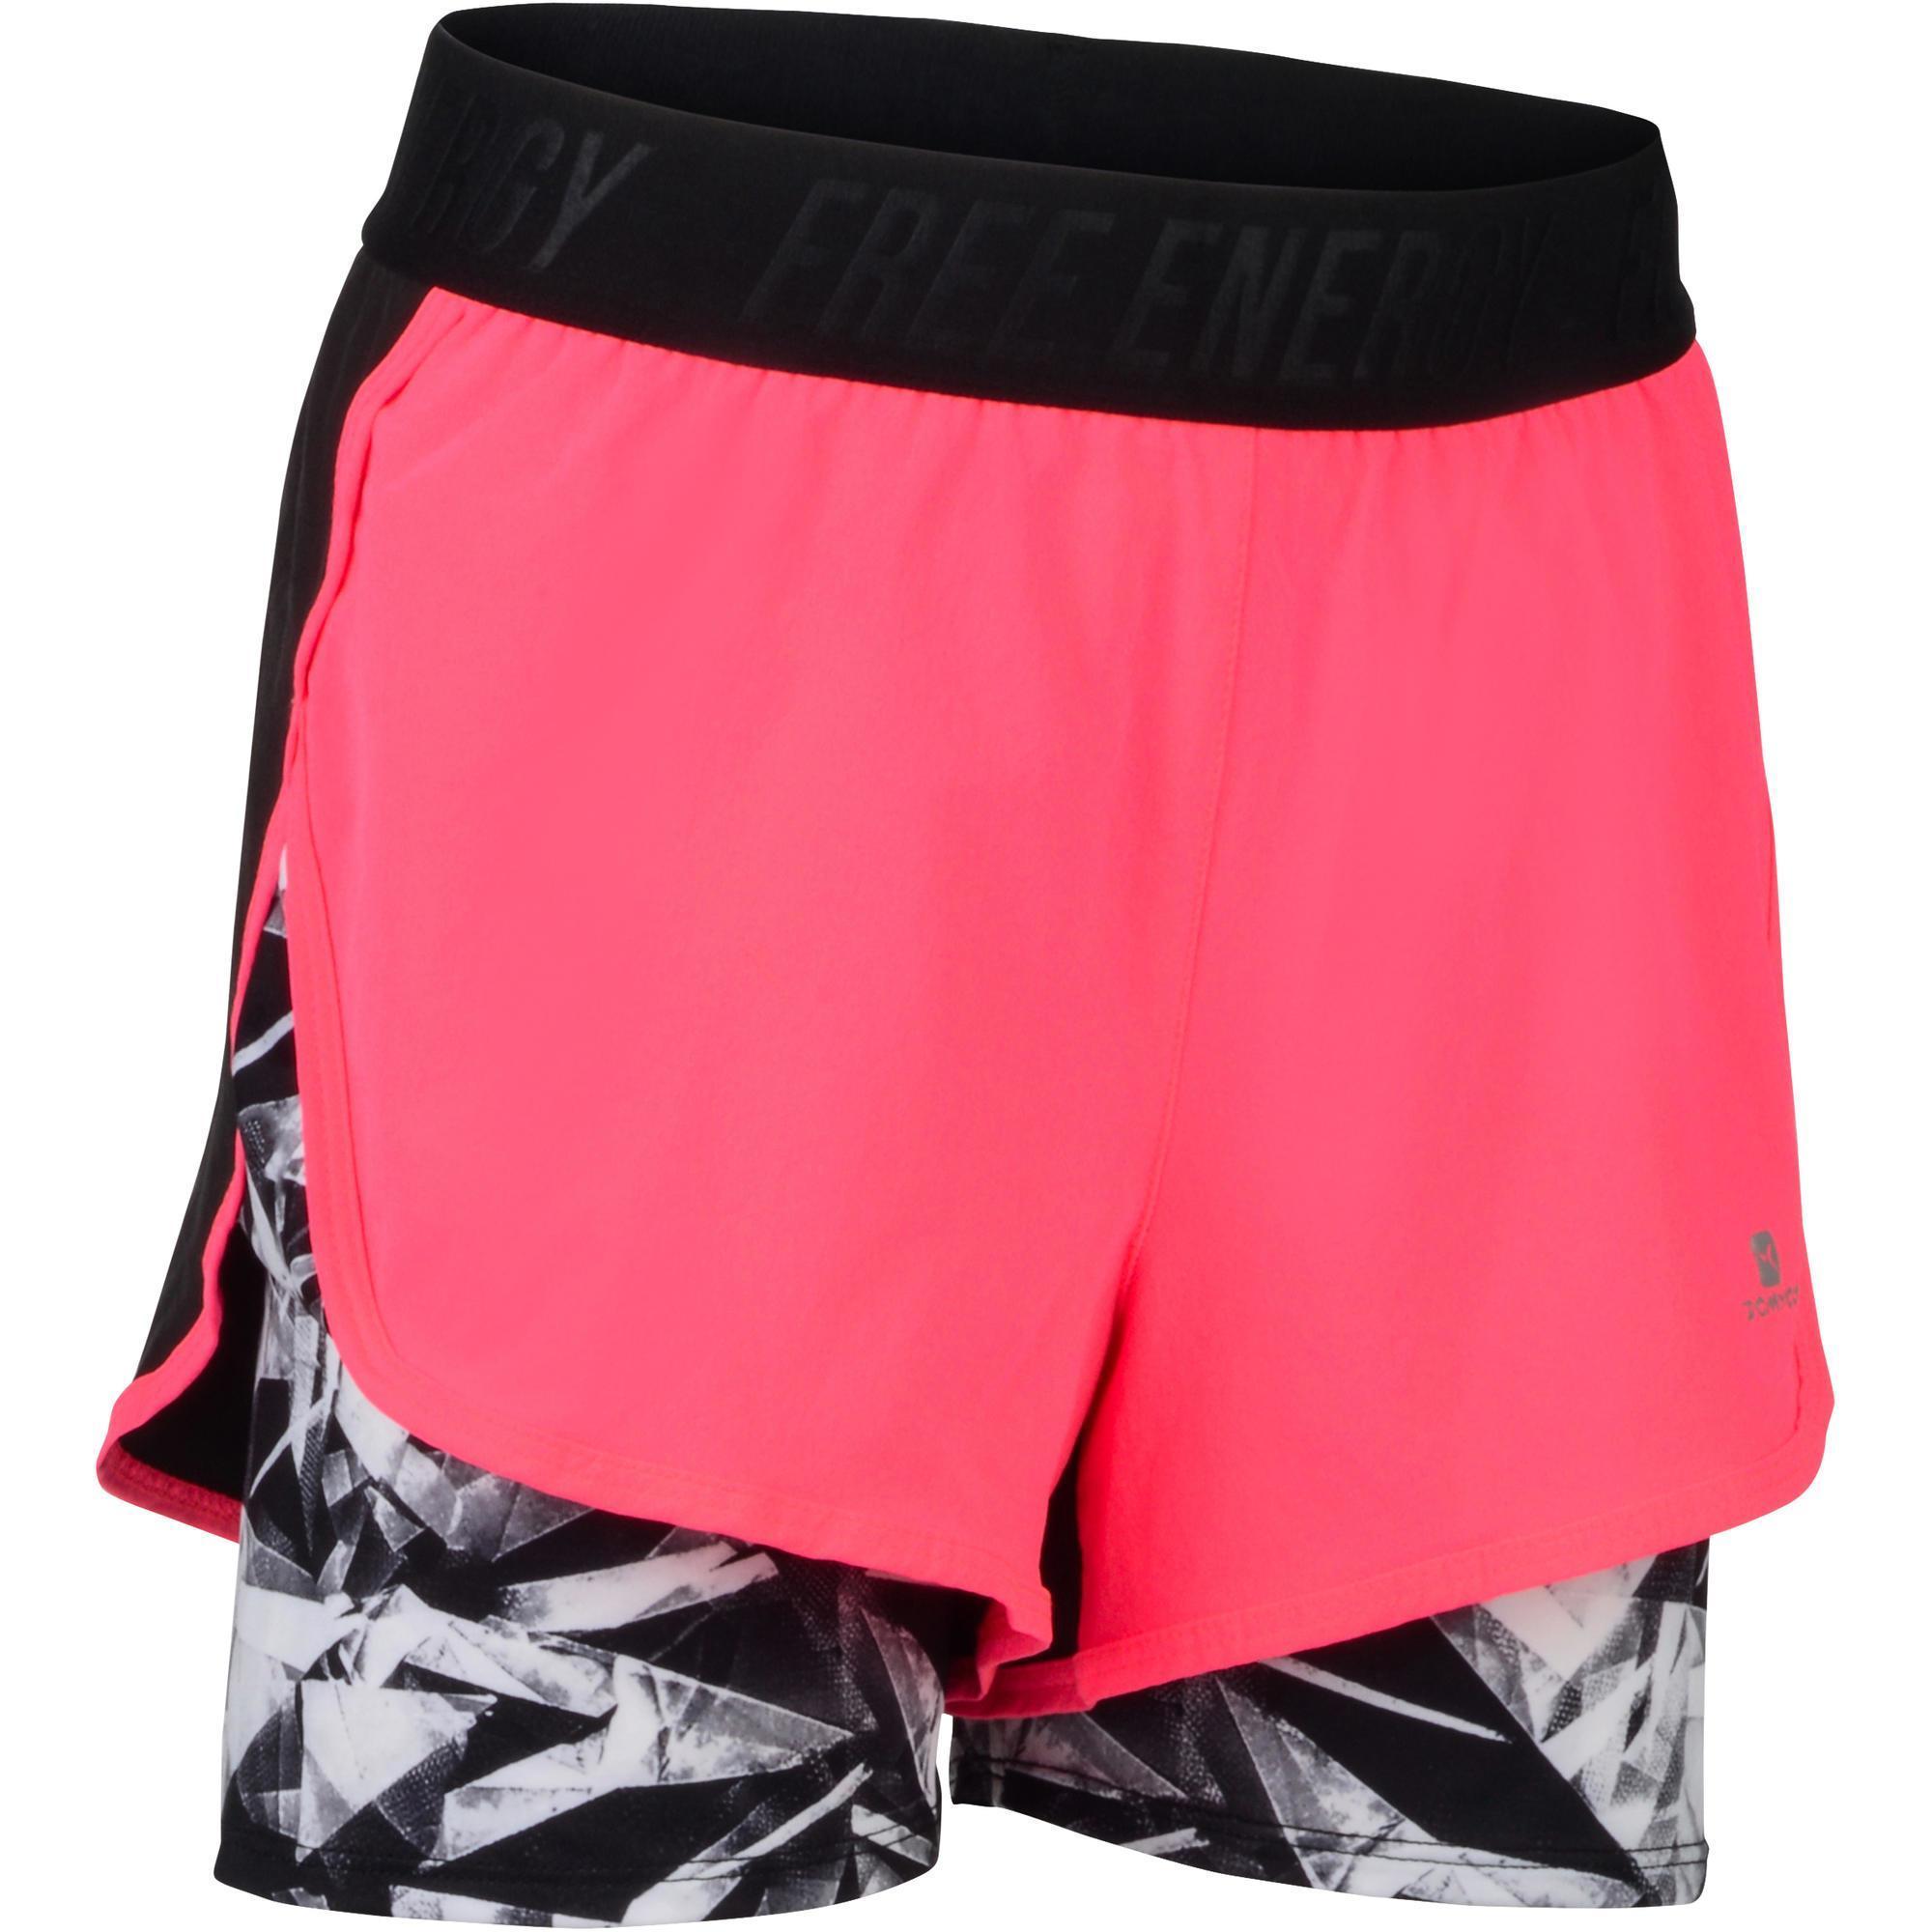 W900 Girls' Gym Shorts - Black/Pink 